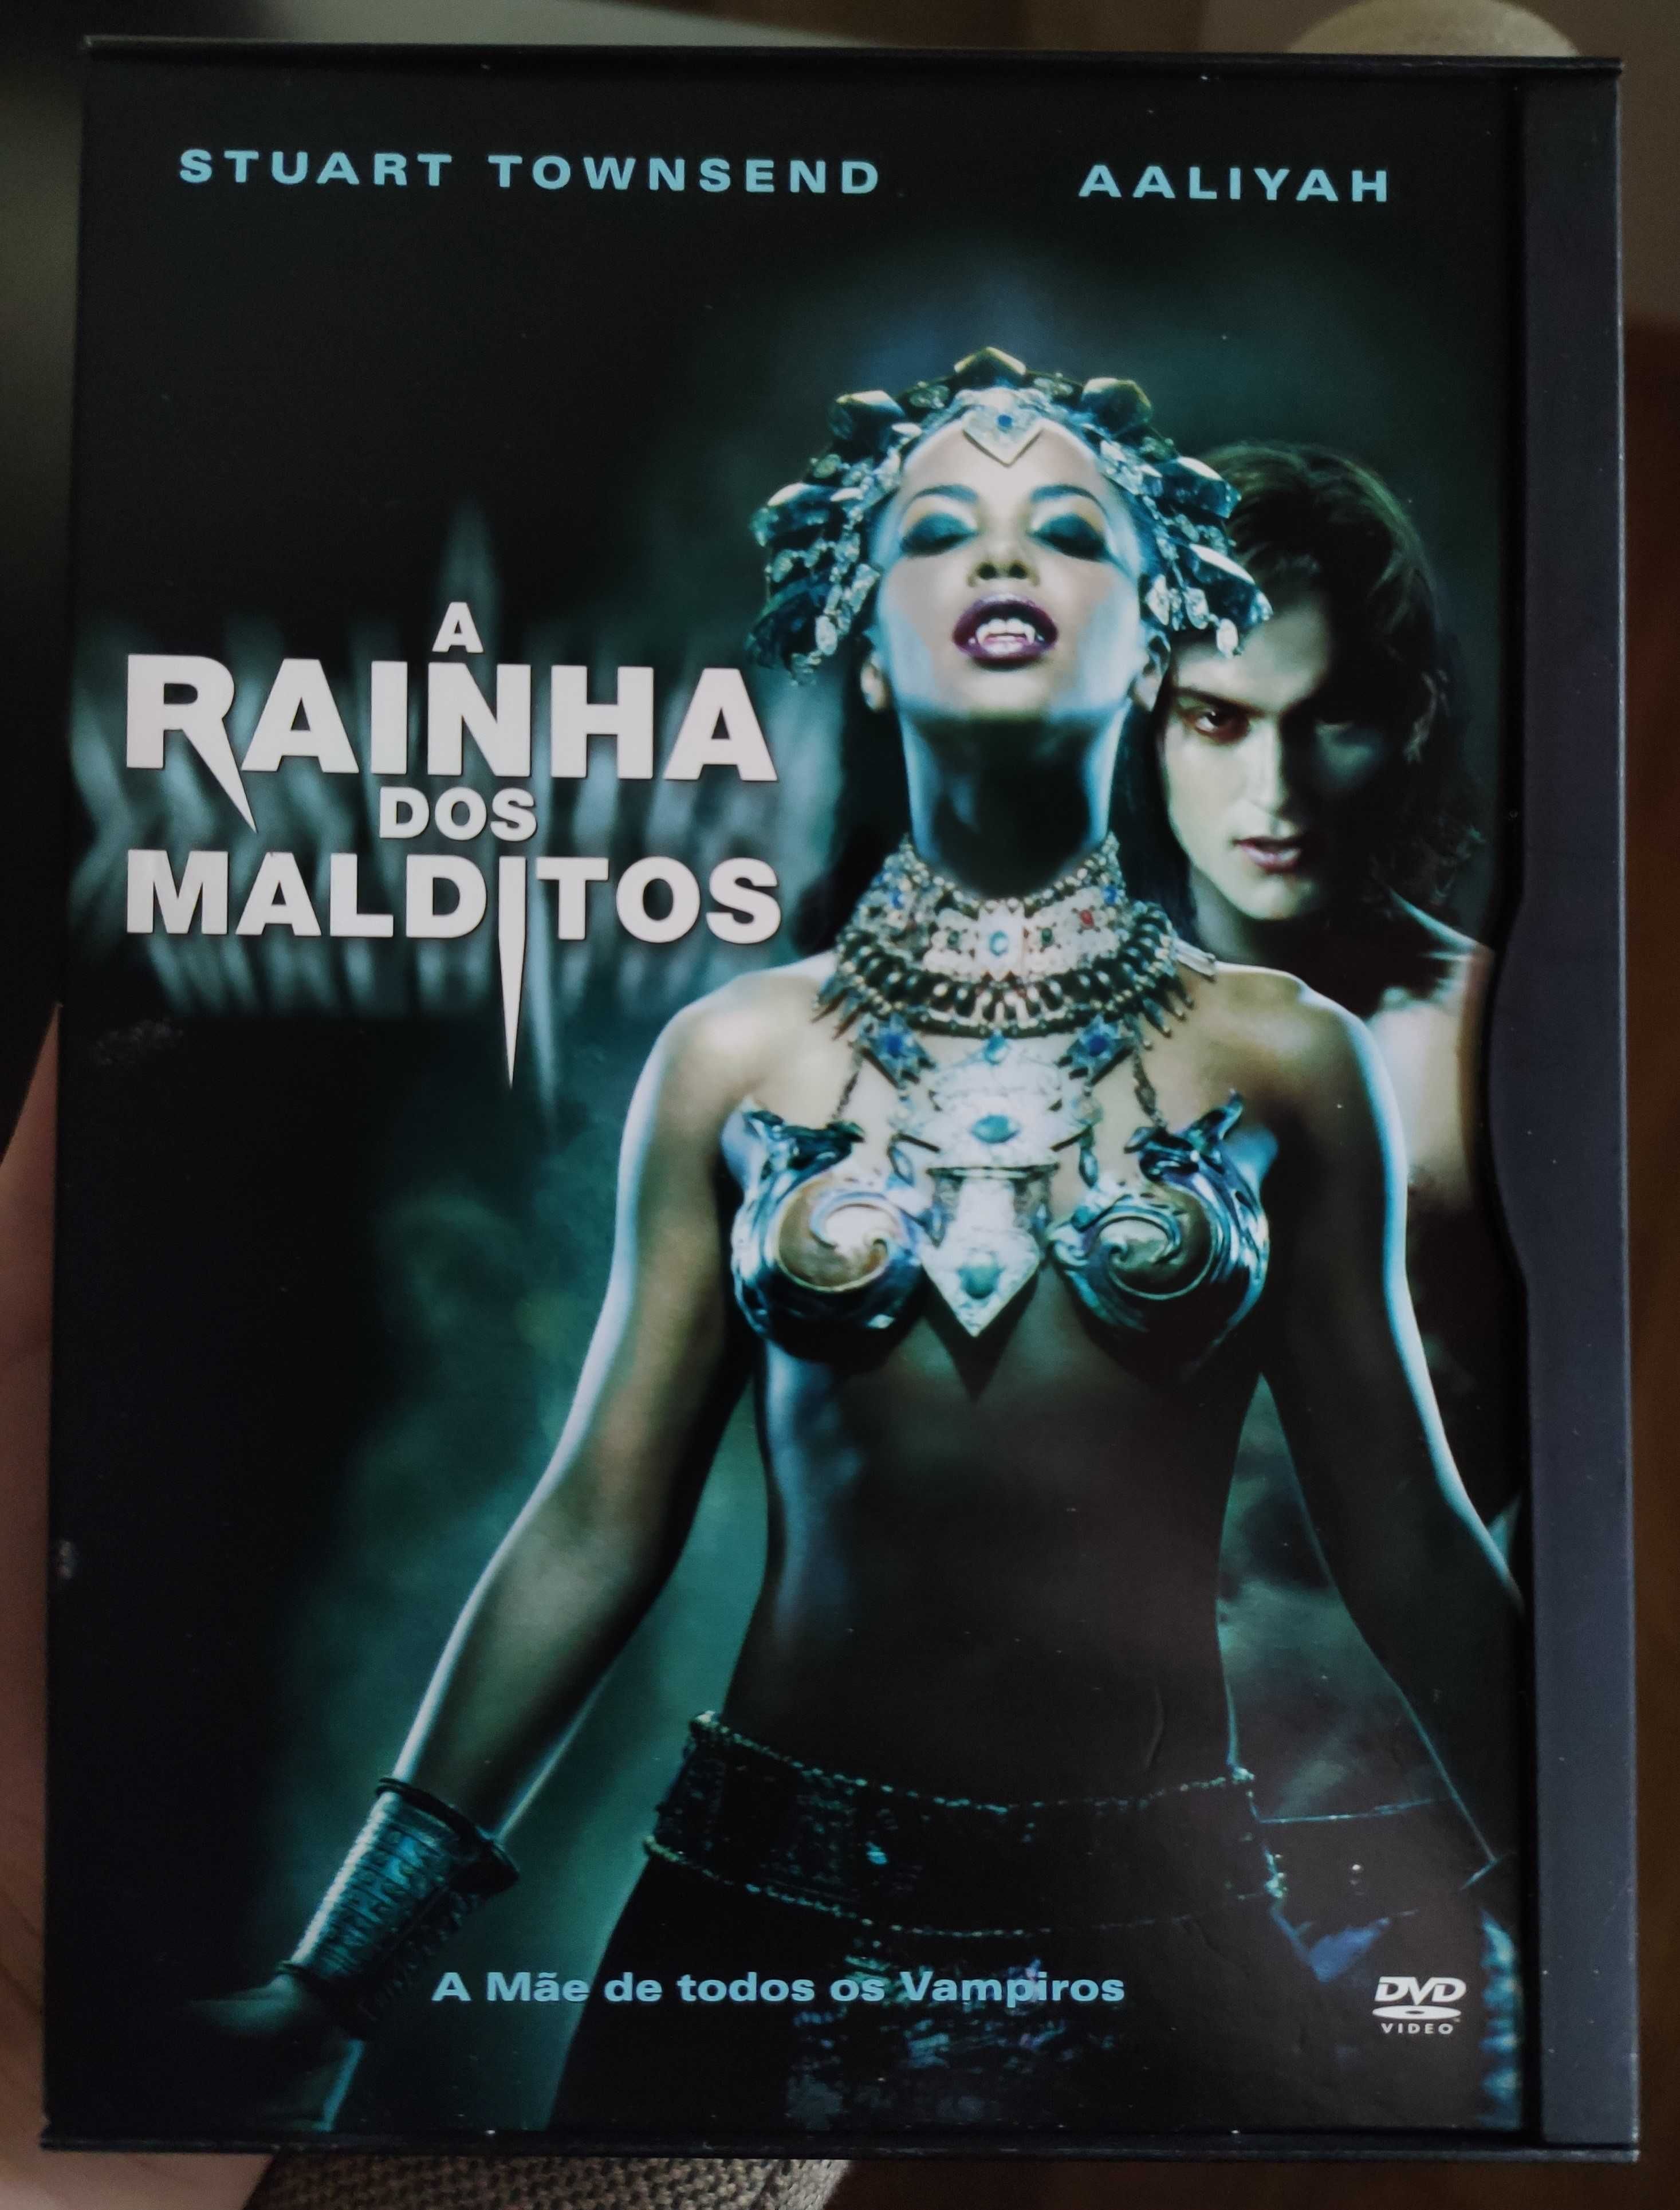 DVD "A Rainha dos Malditos"